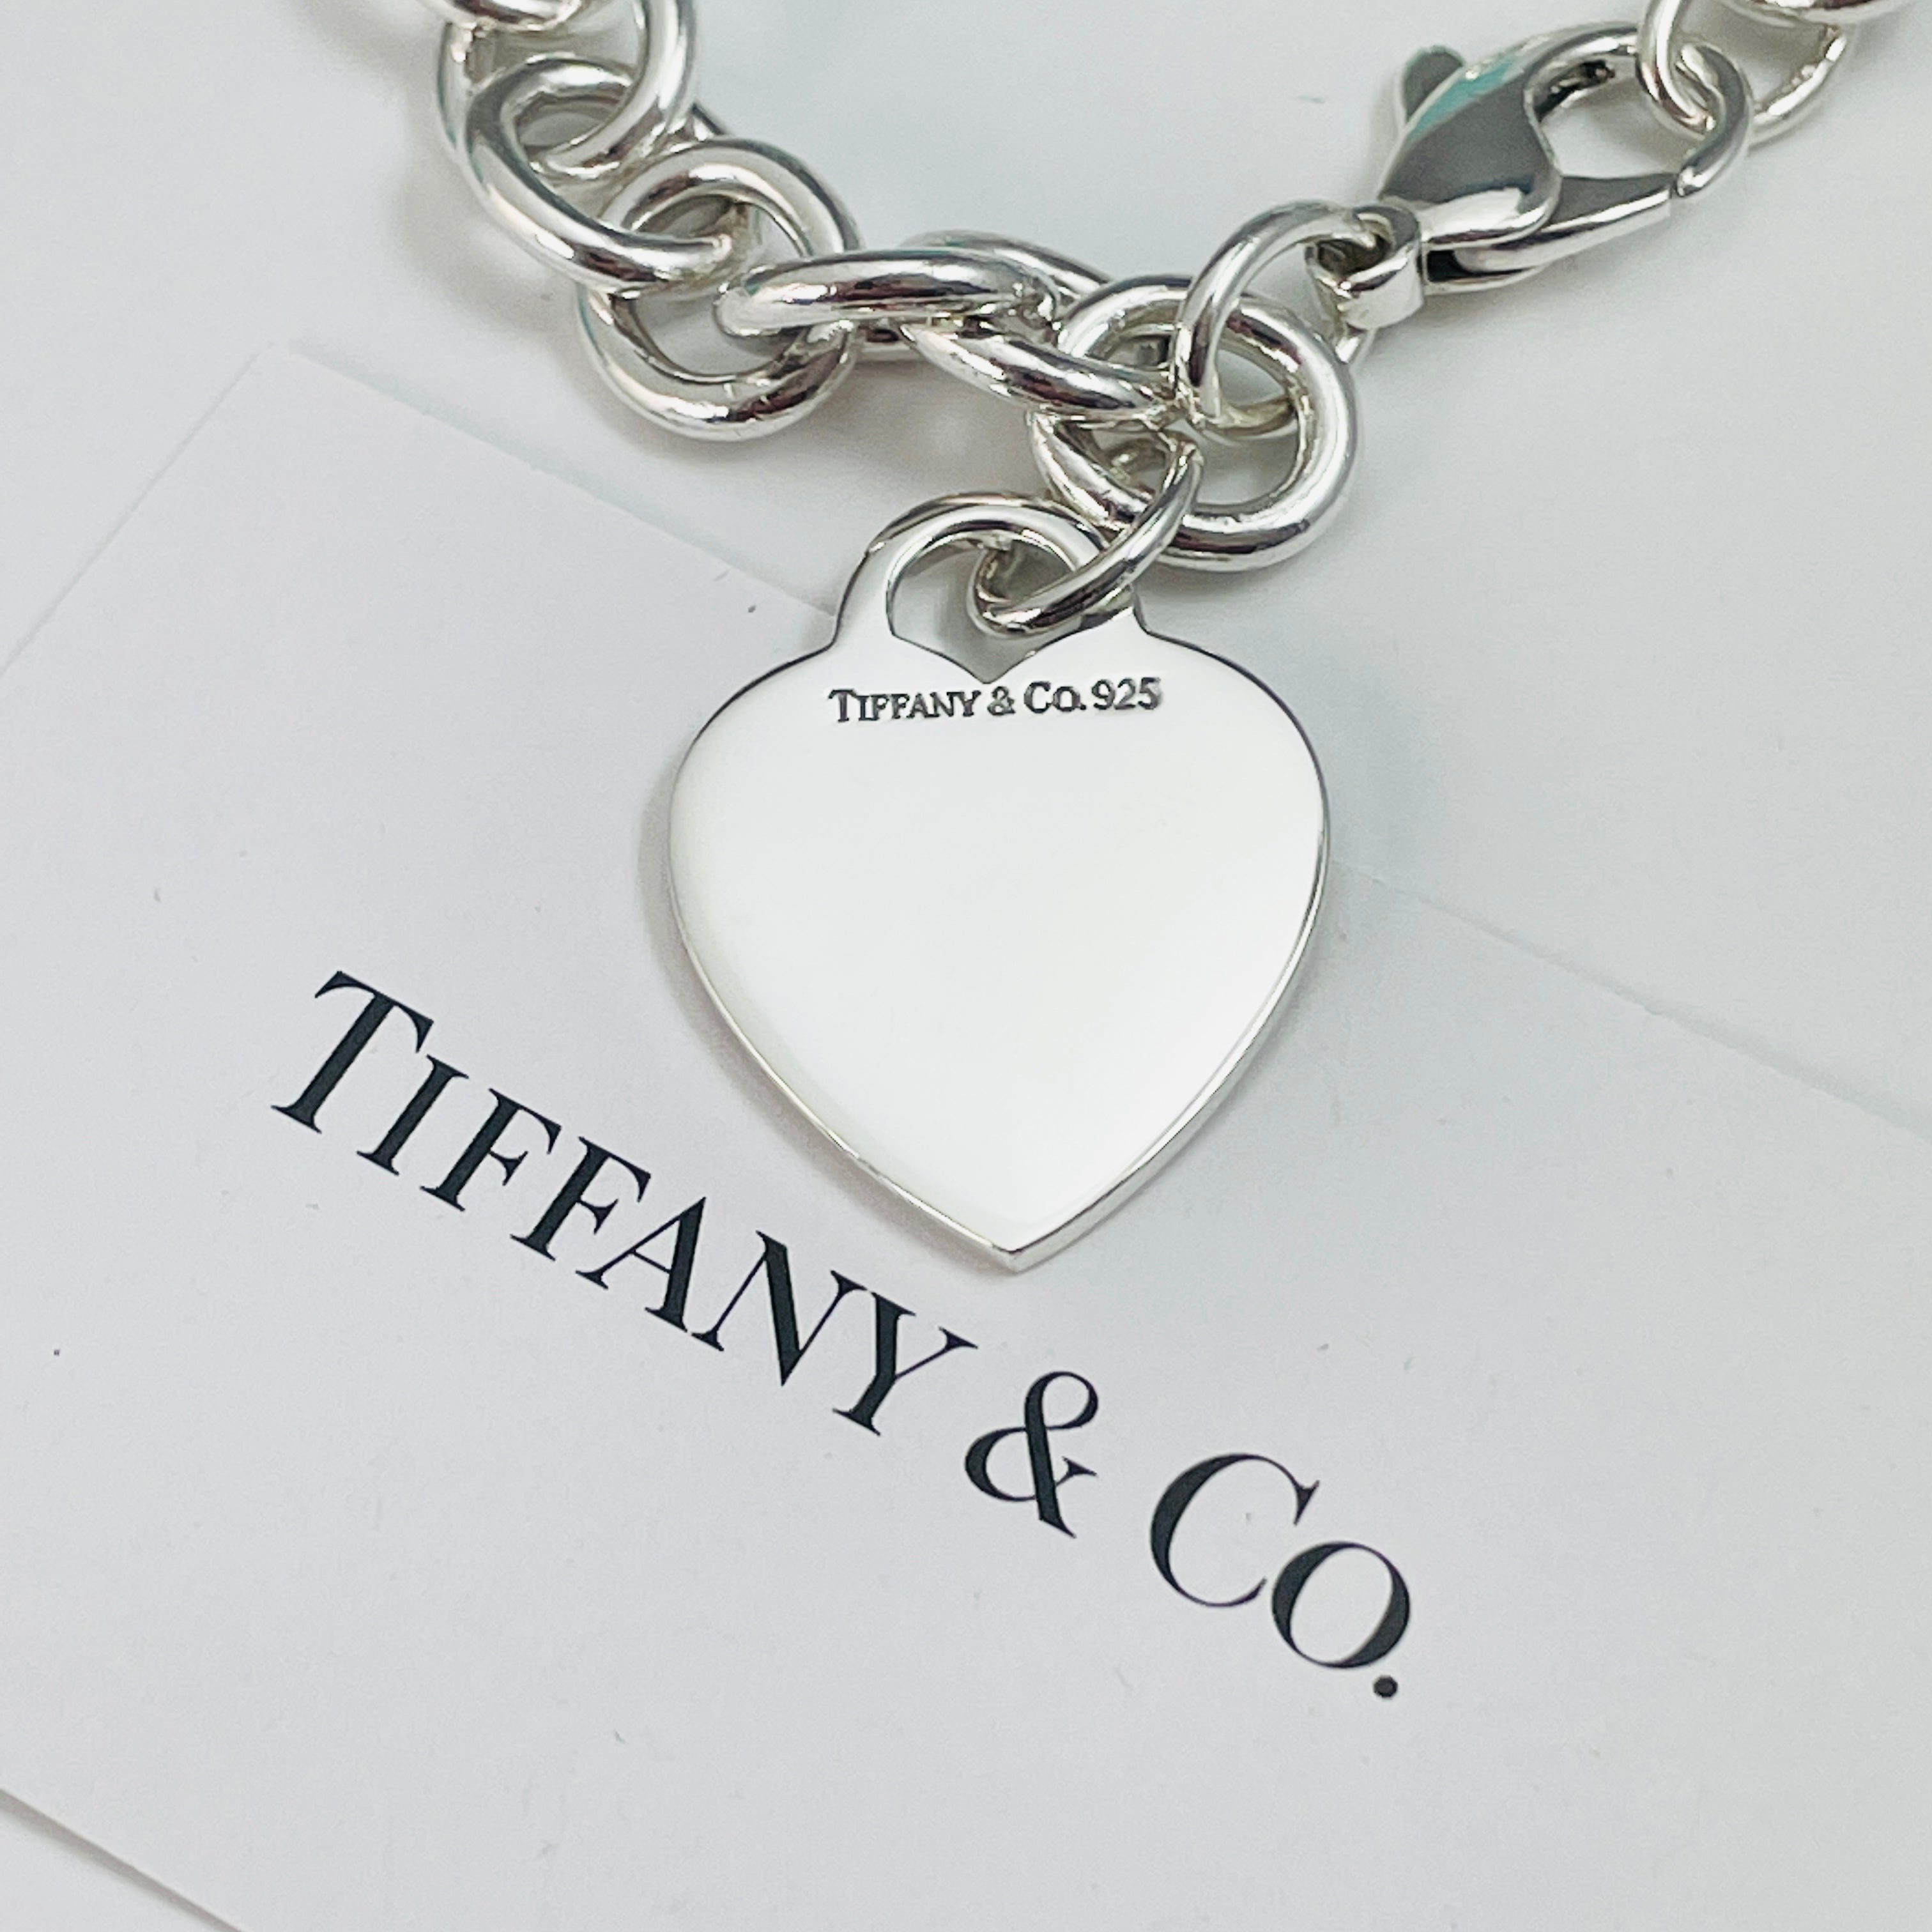 Tiffany & Co. | Jewelry | Tiffany Co Sterling Silver 925 Please Return To  Heart Tag Charm 7 Bracelet | Poshmark